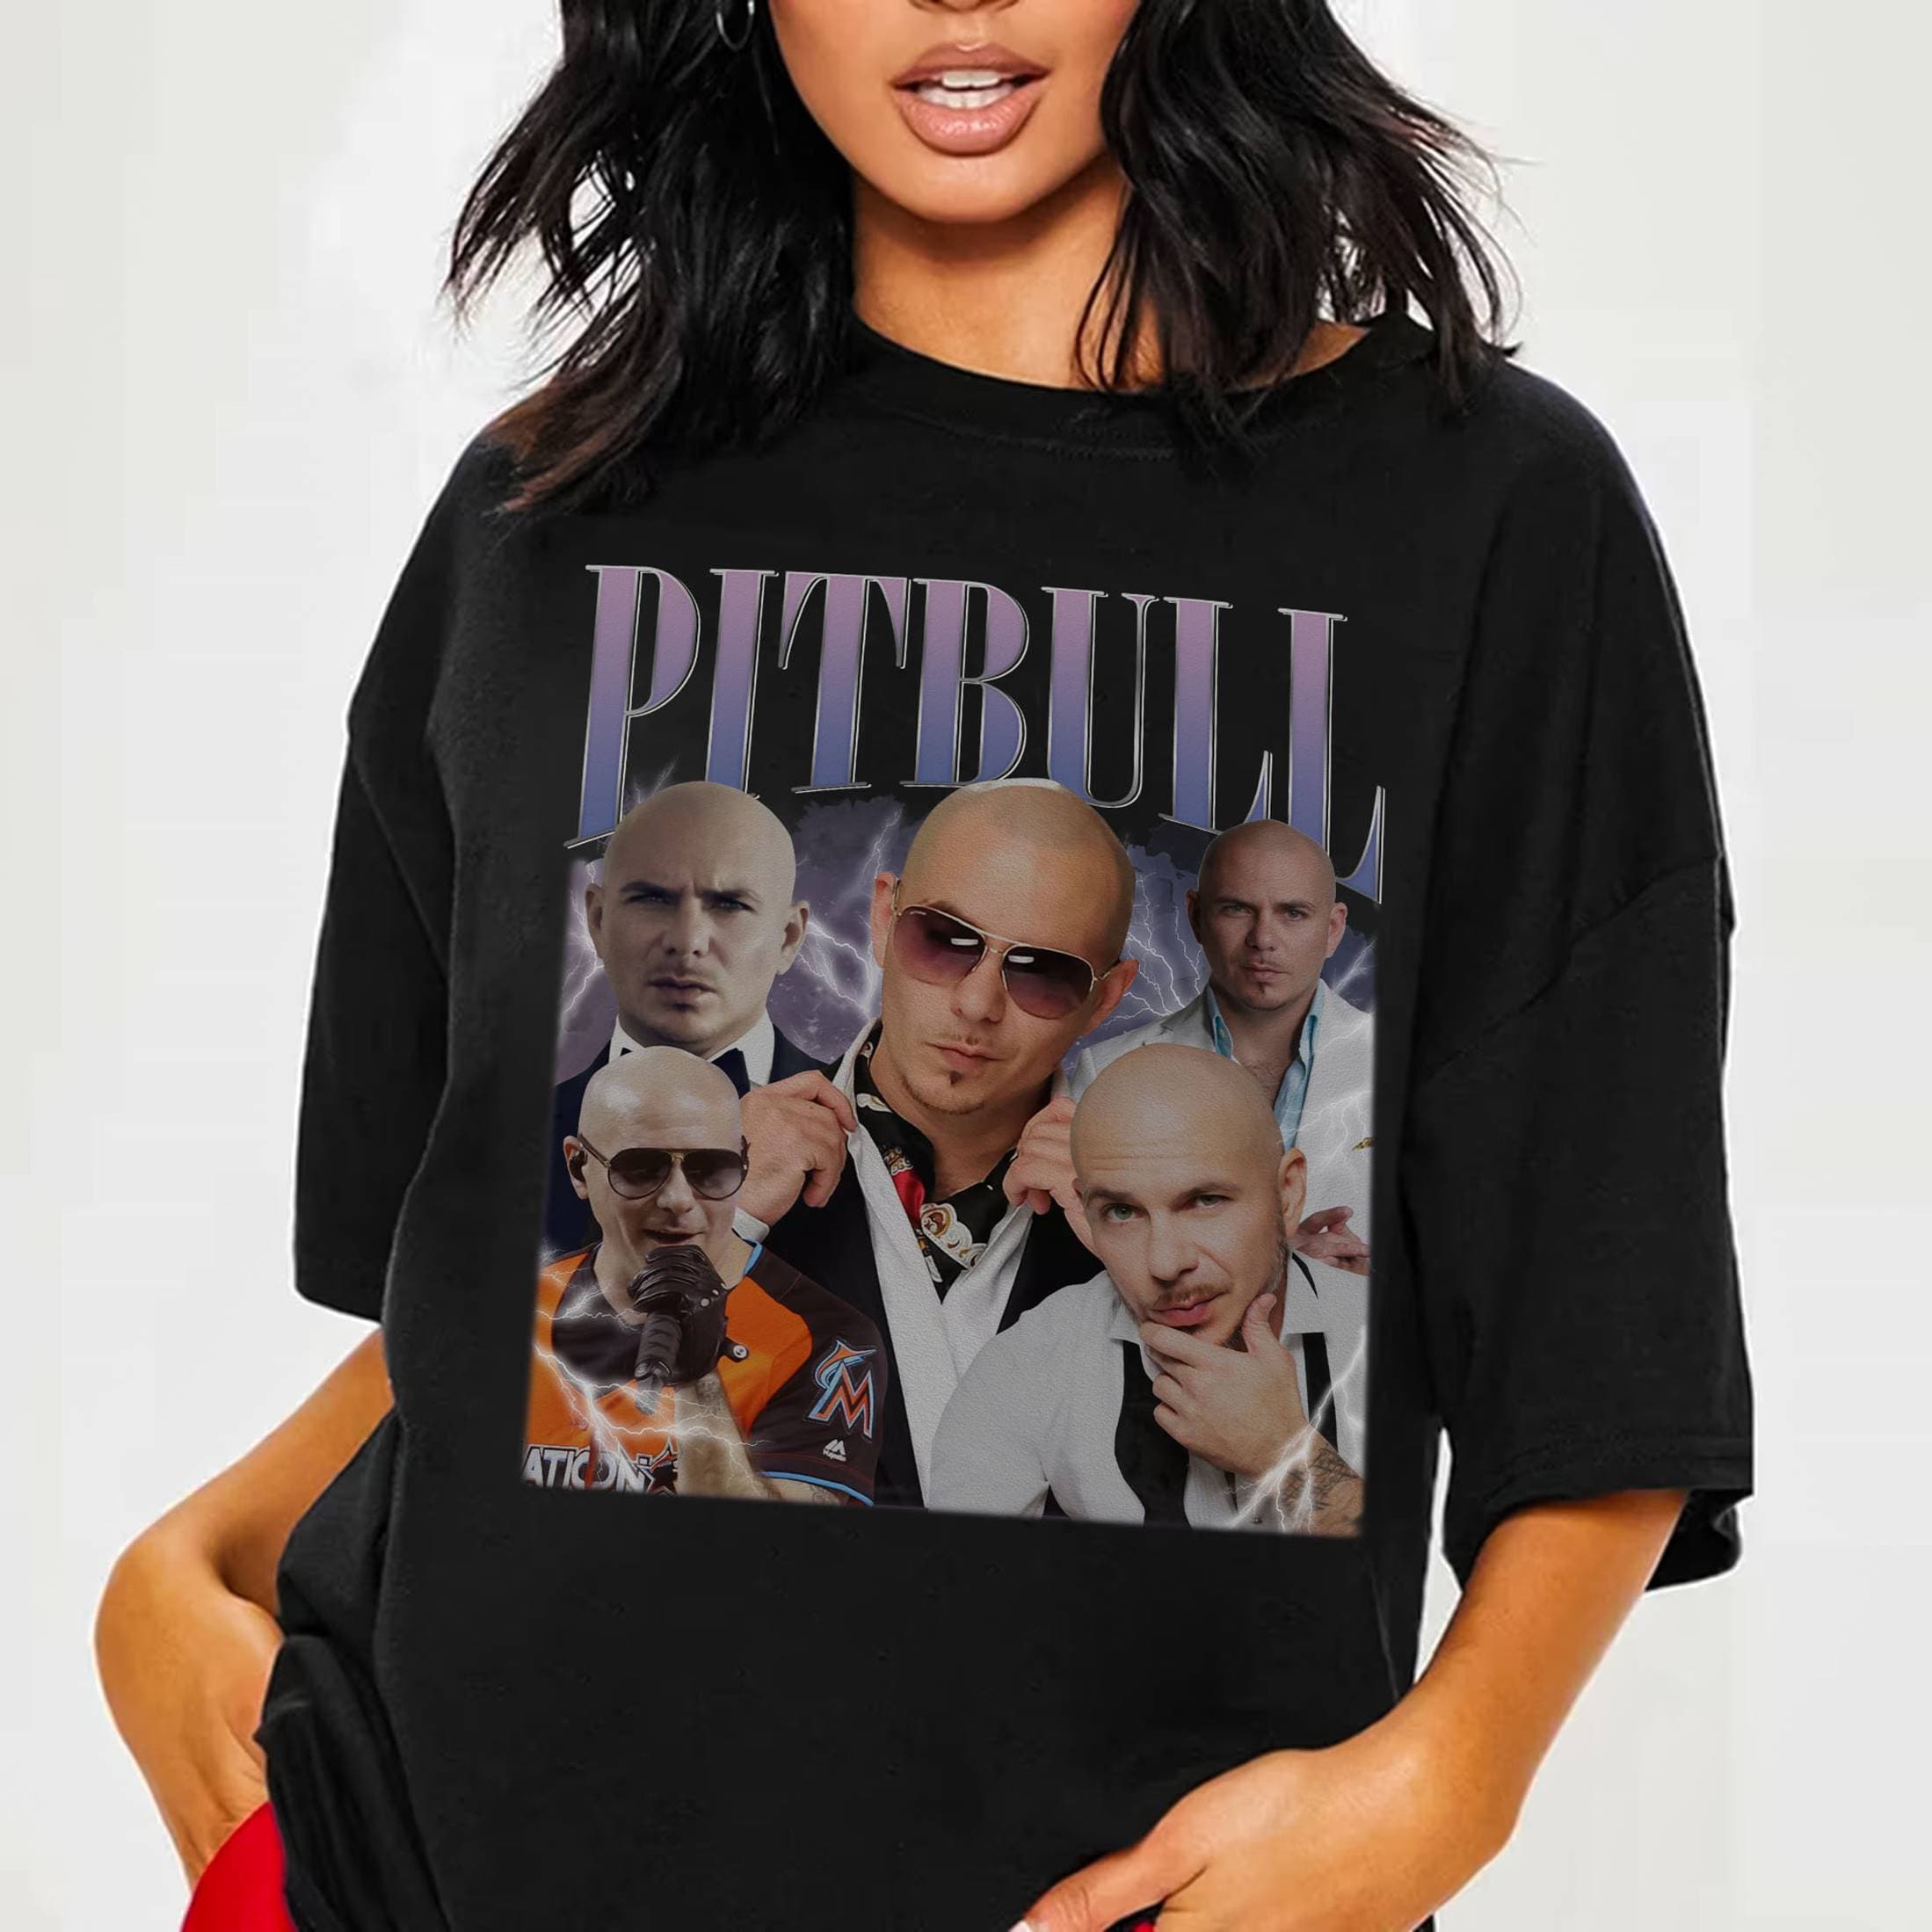 jersey t-shirt with Pitbull print